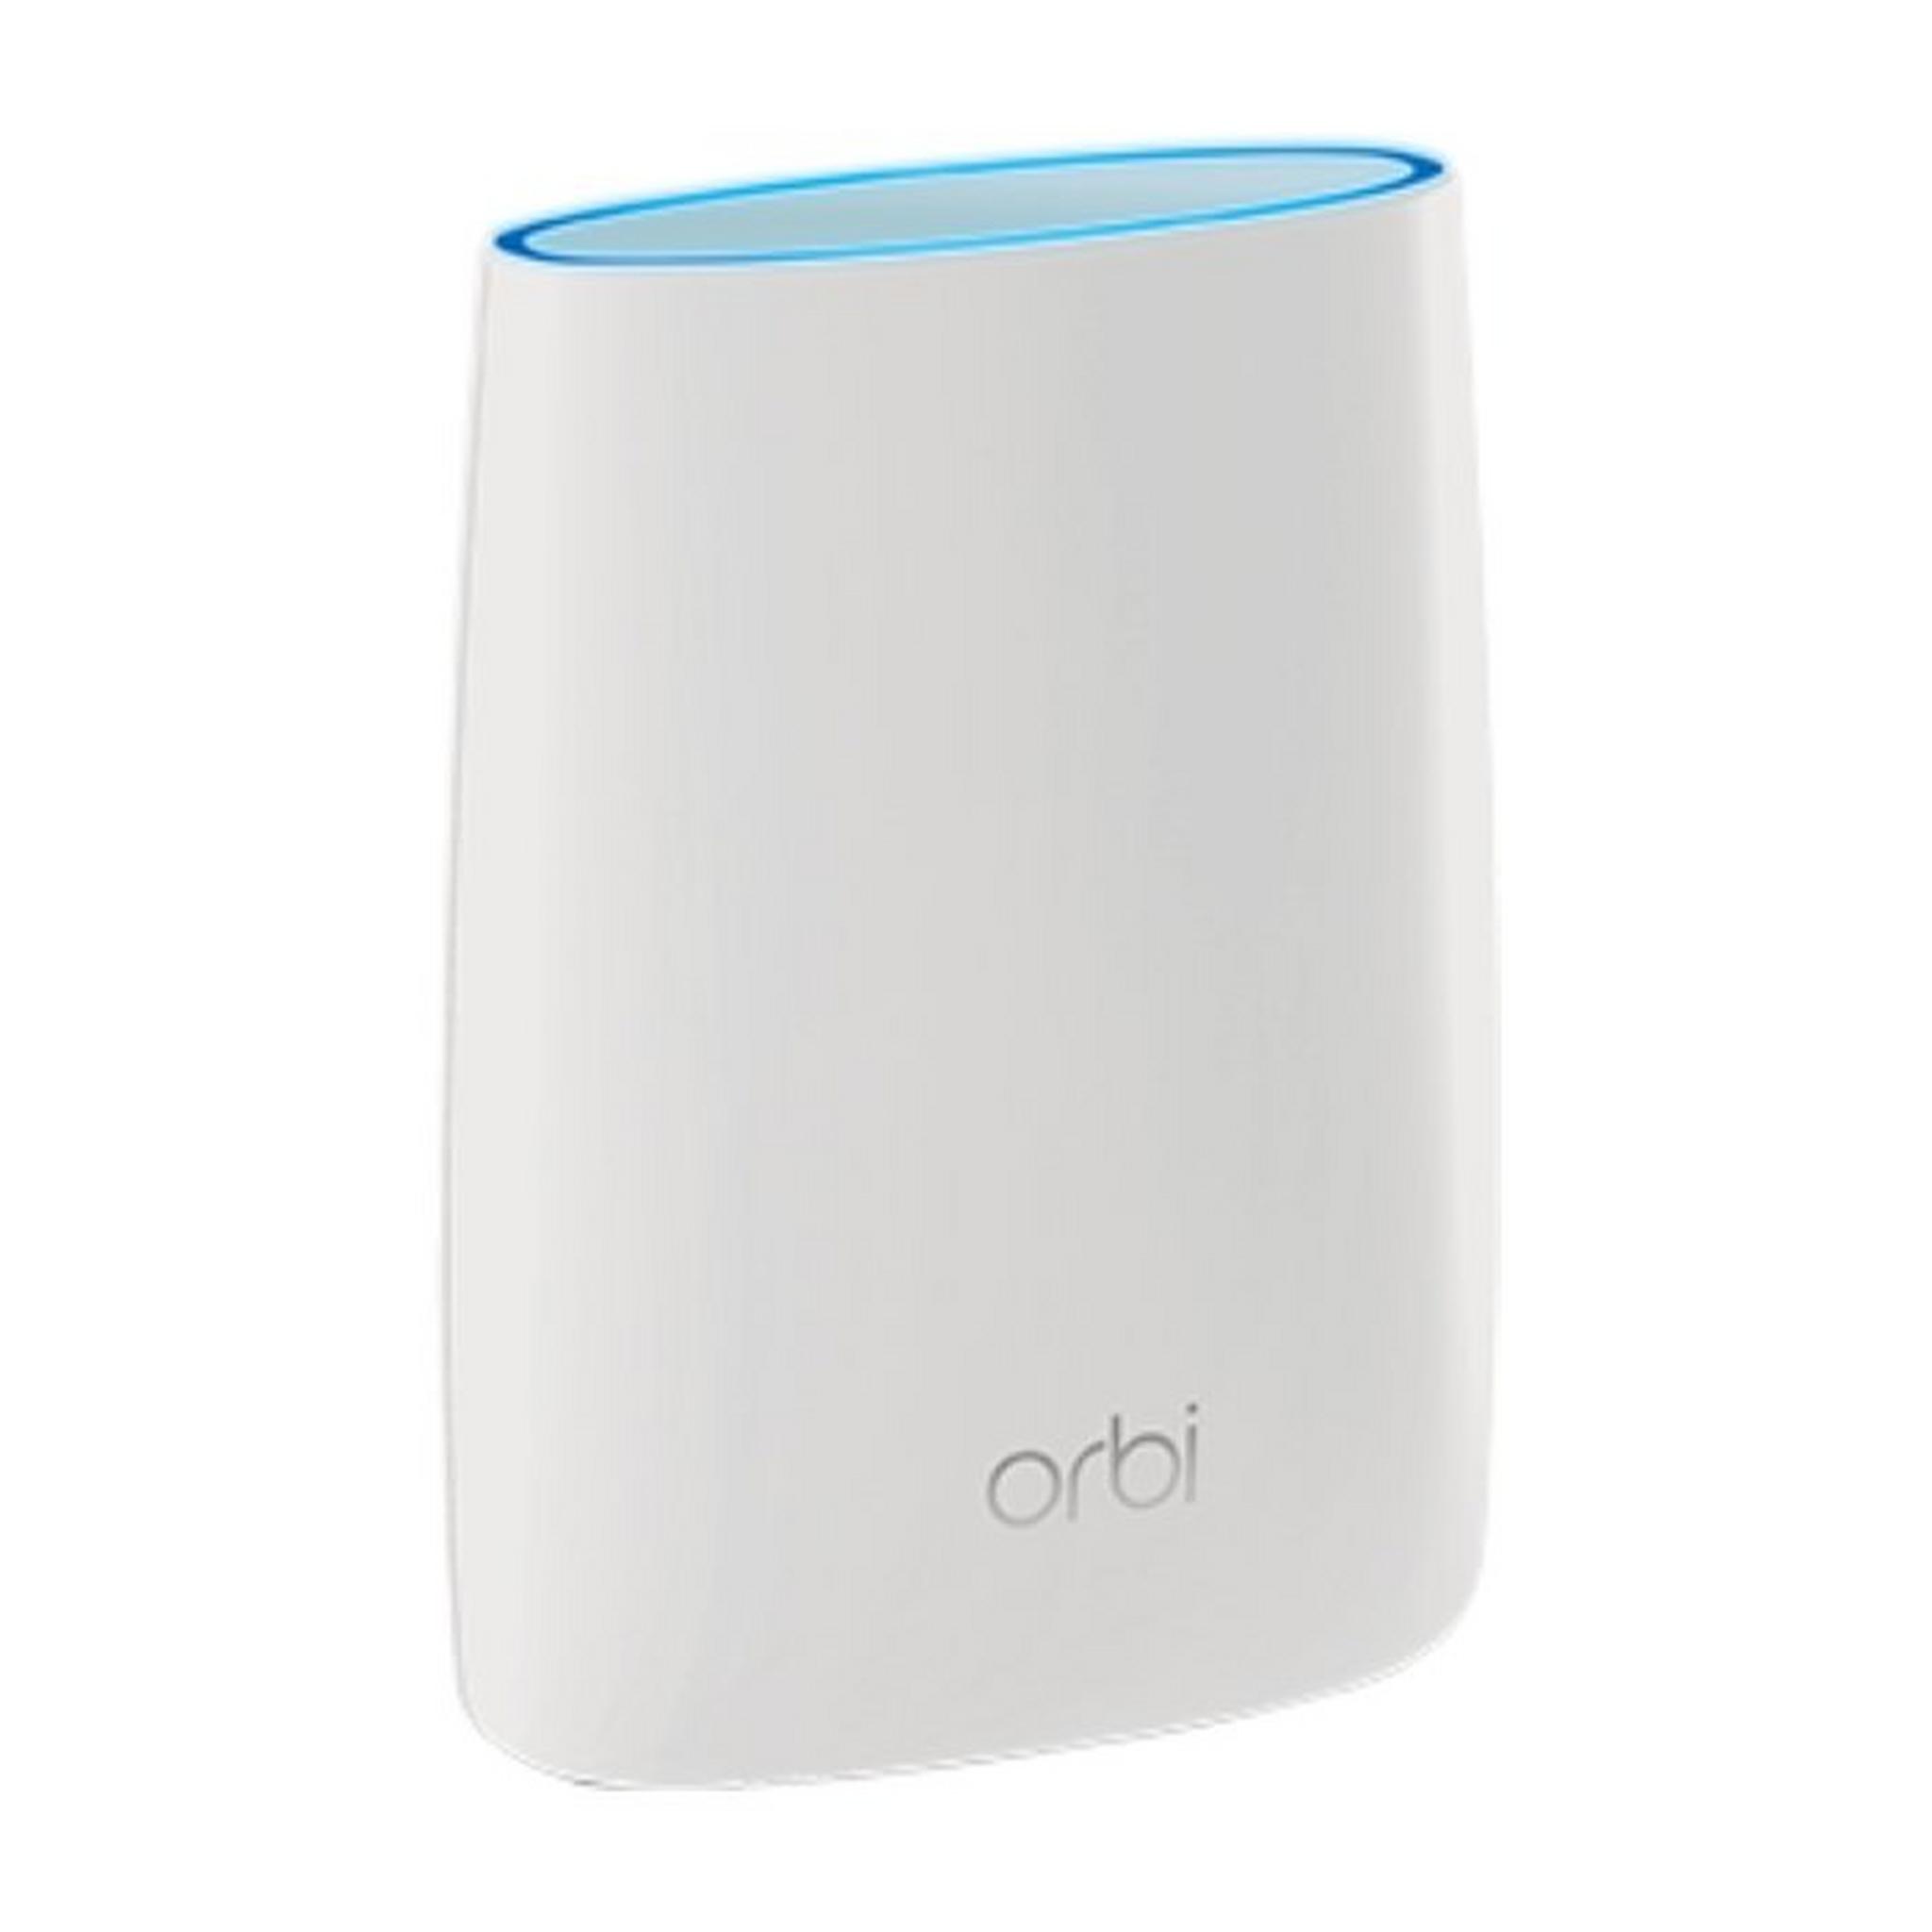 Orbi AC2200 Mesh Tri-Band WiFi System (RBK23)